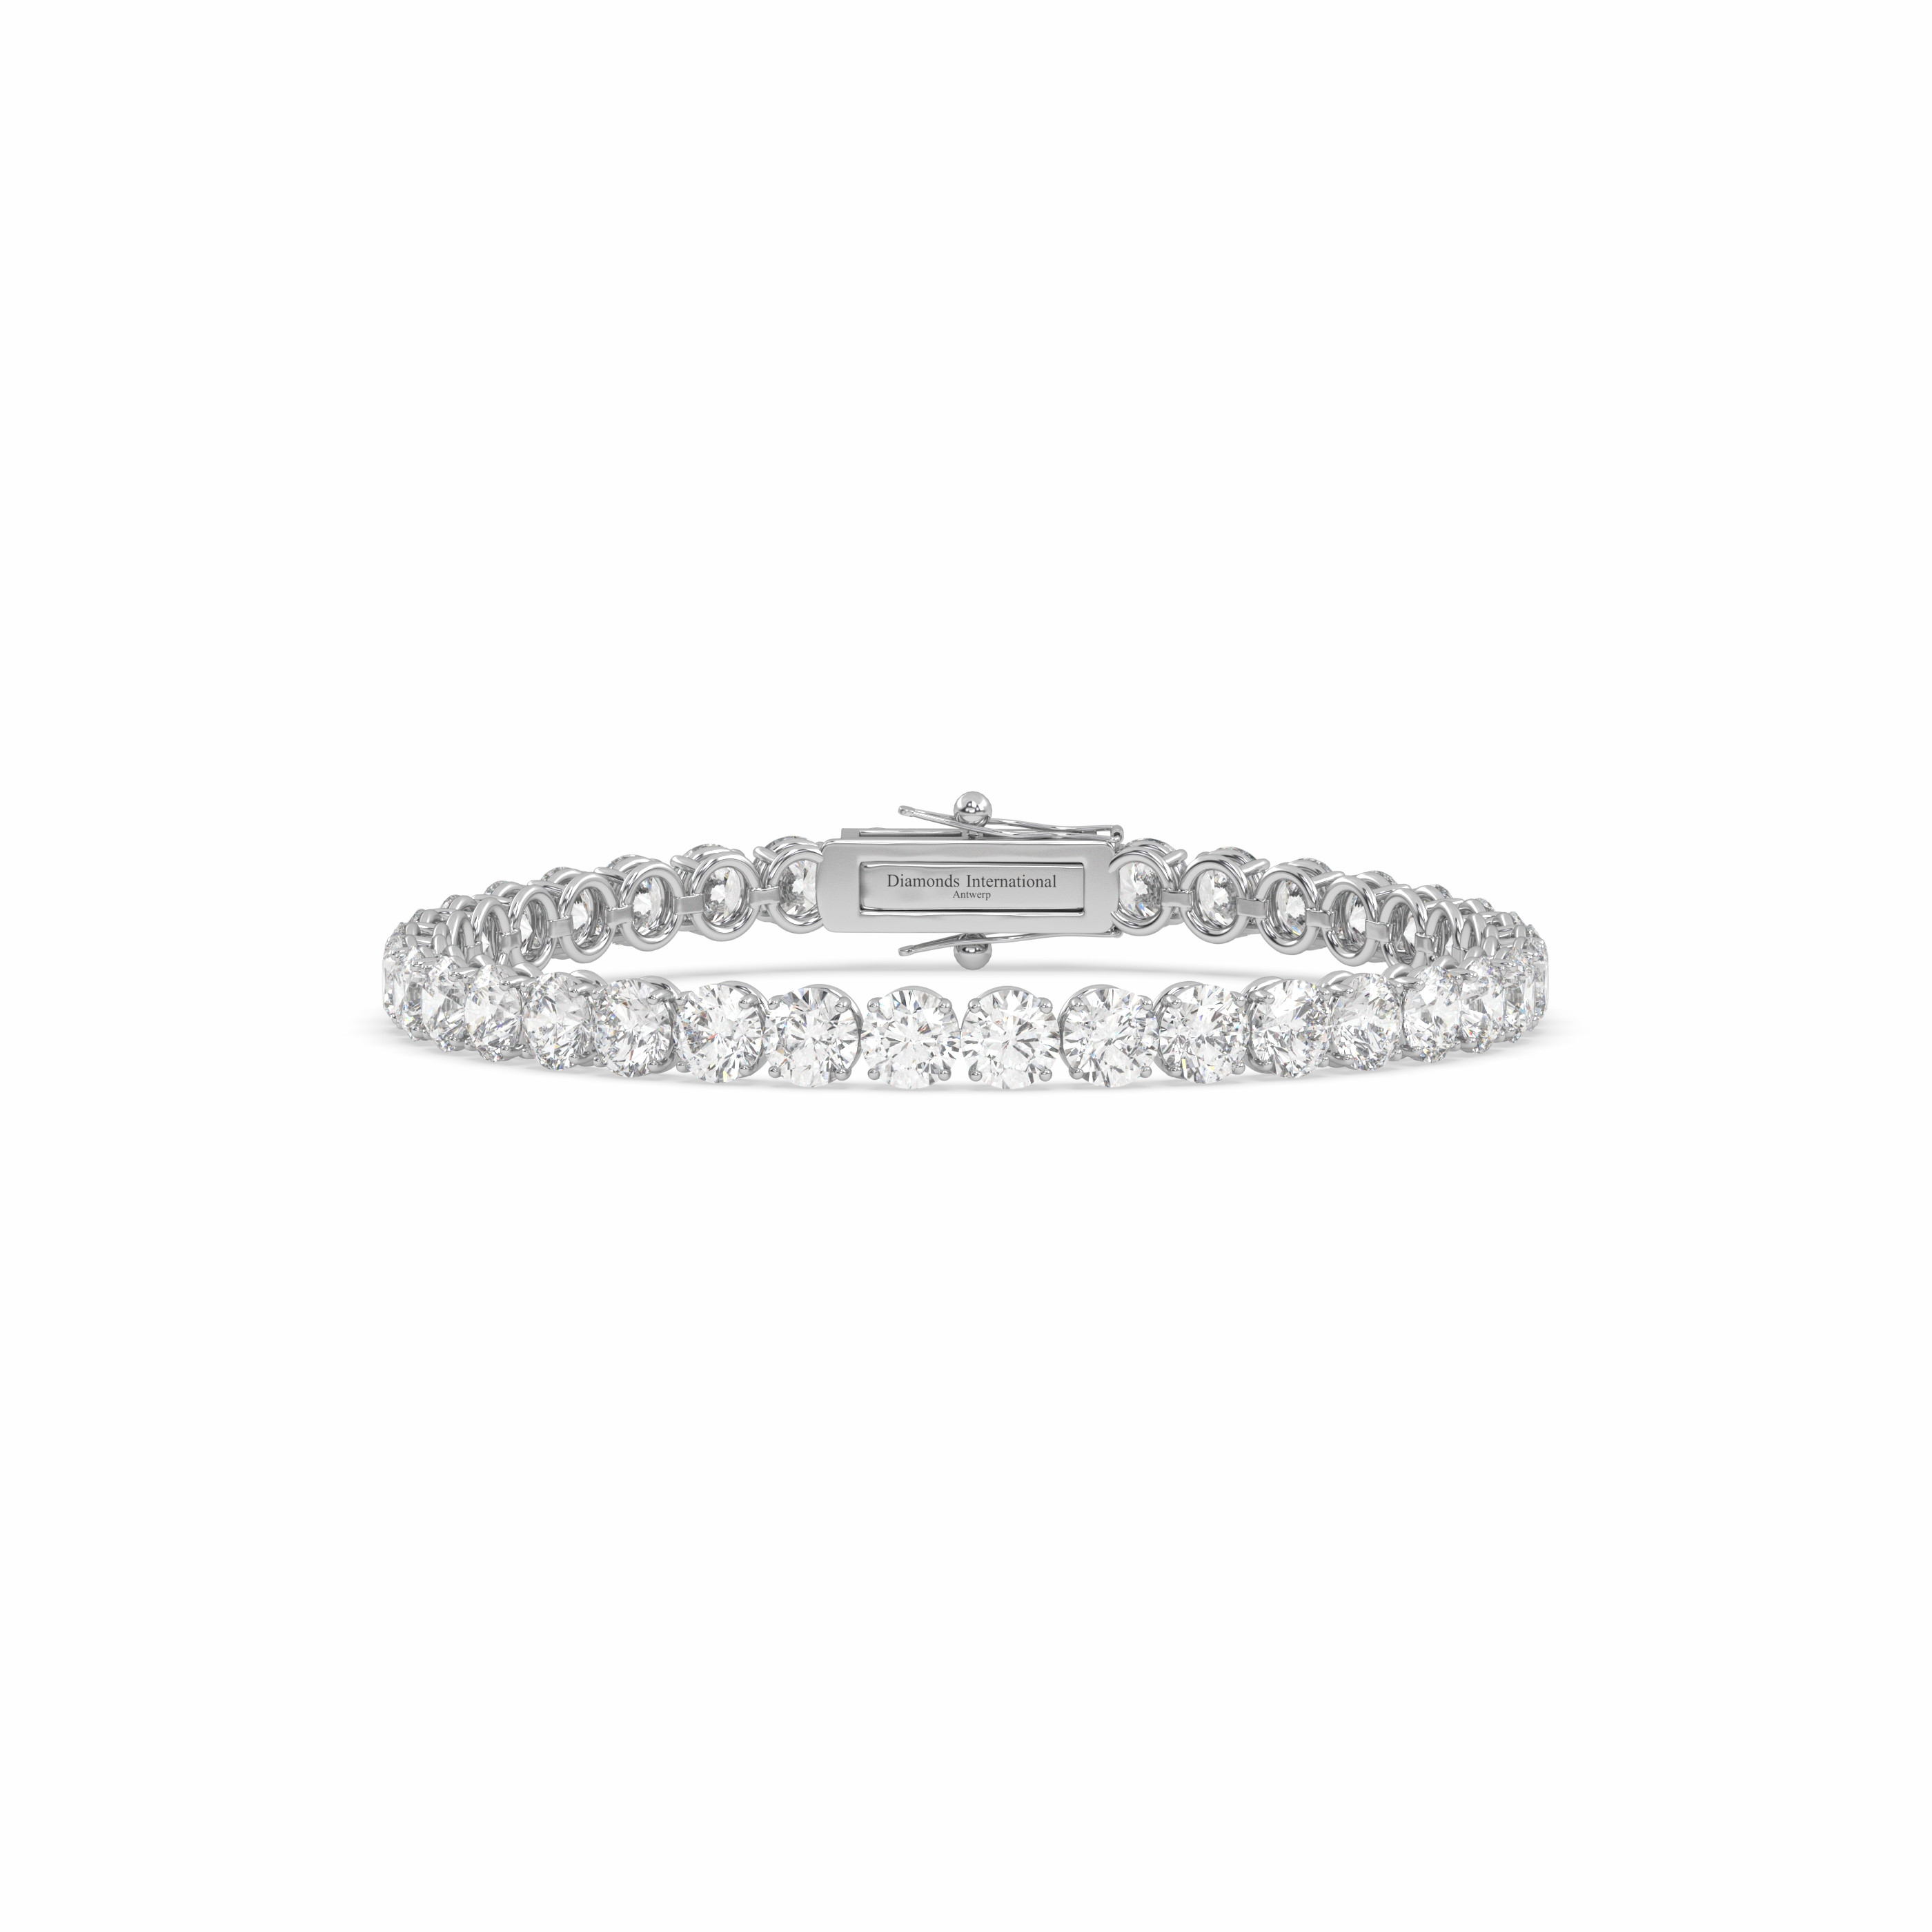 18k white gold 4.0 carat round cut diamond tennis bracelet Photos & images